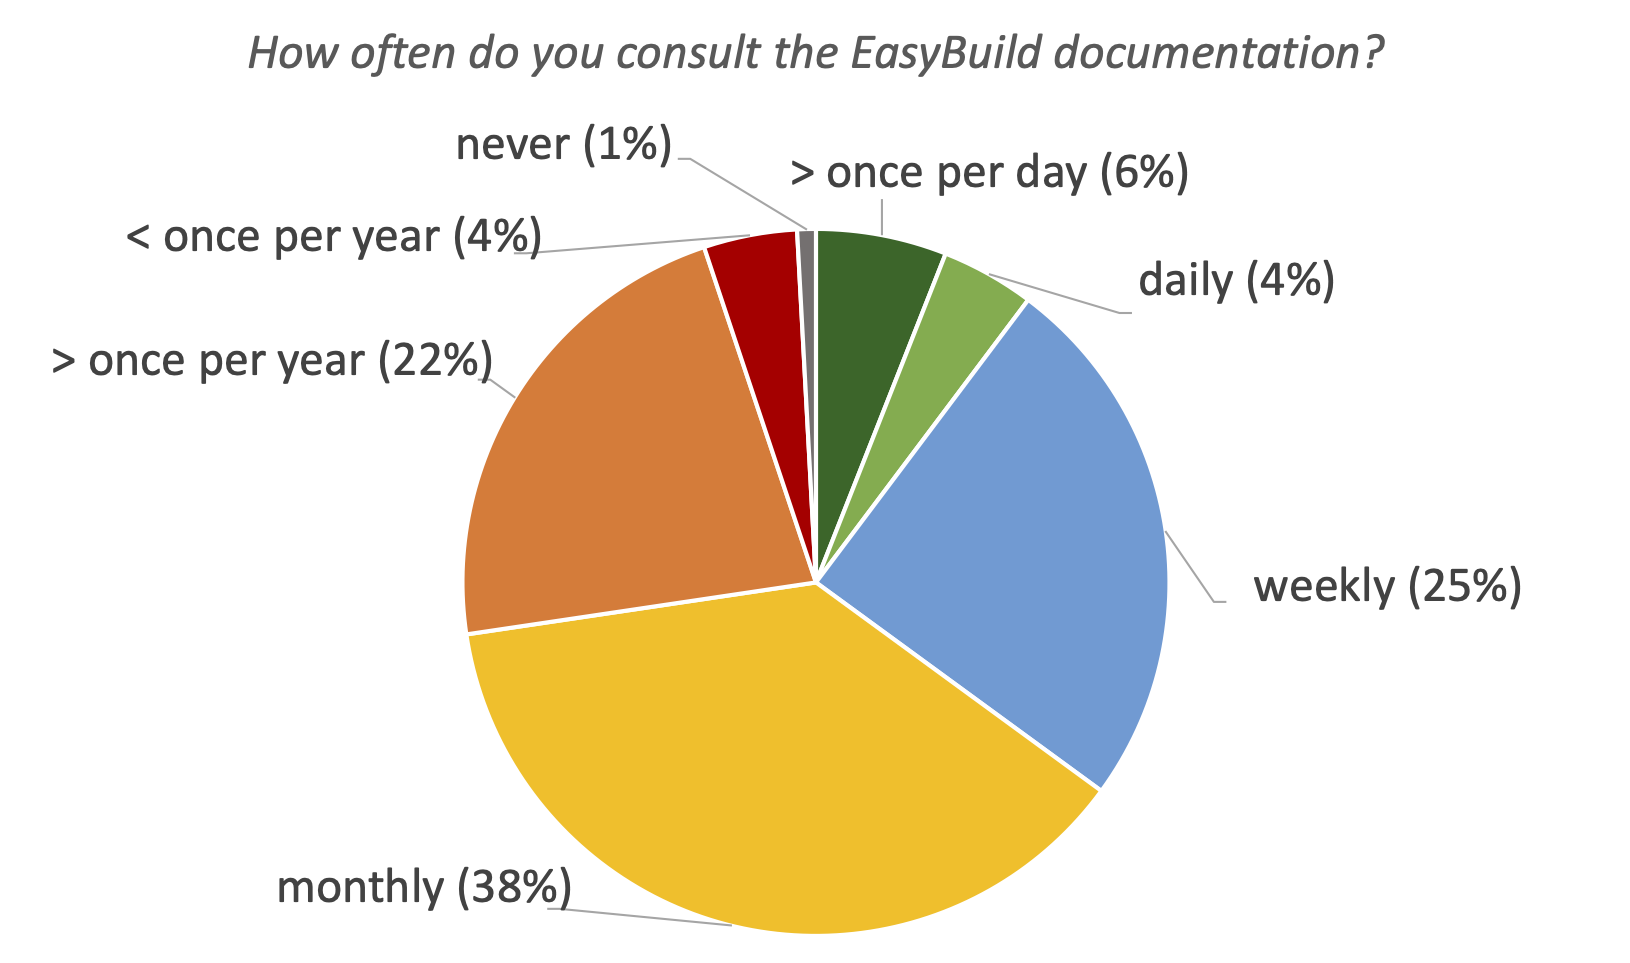 37. How often do you consult the EasyBuild documentation?